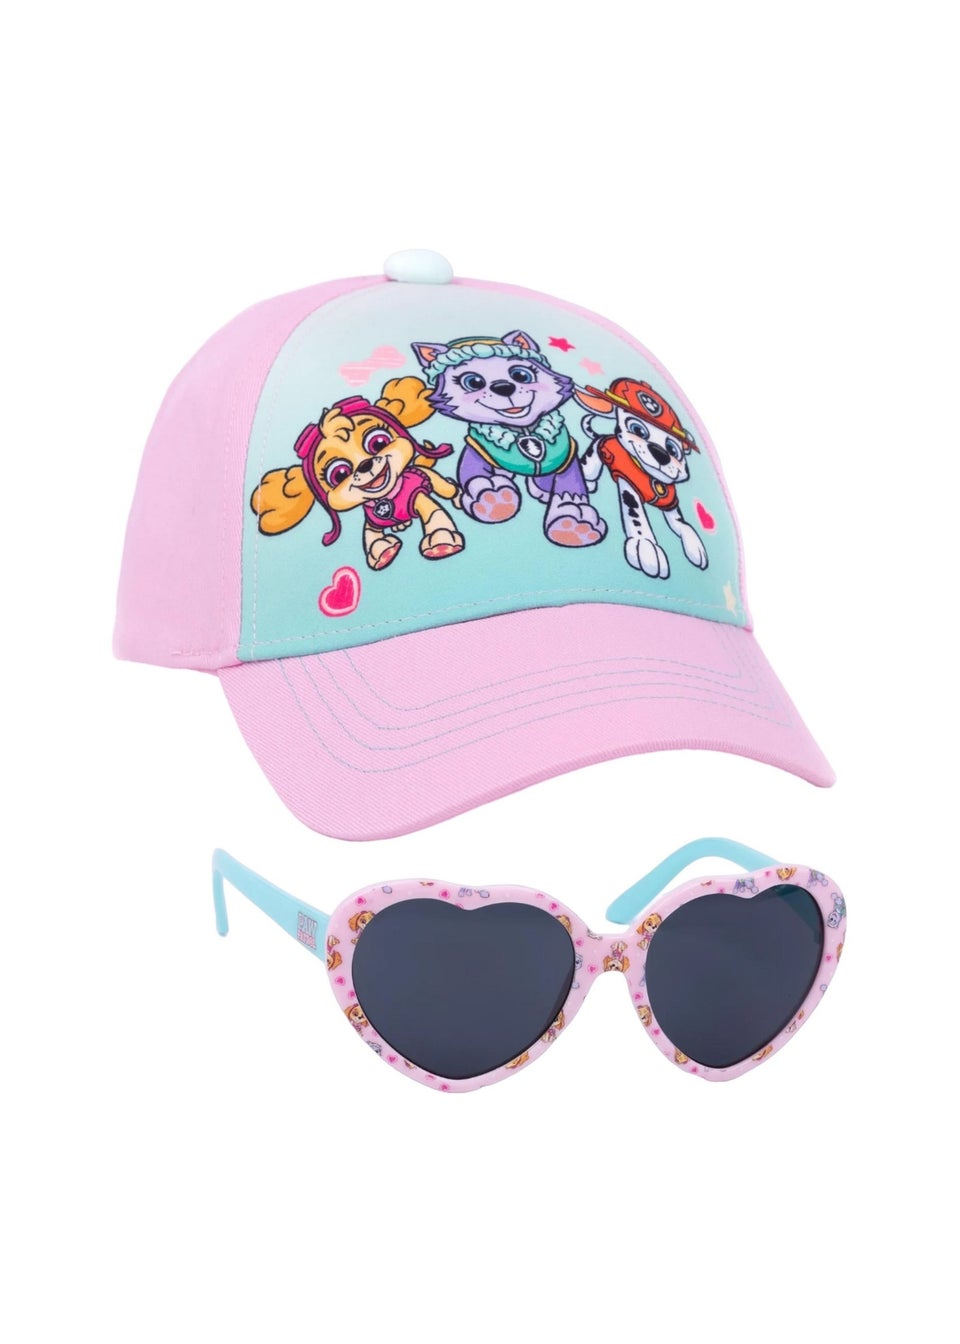 Paw Patrol Multi Sunglasses Baseball Cap Set